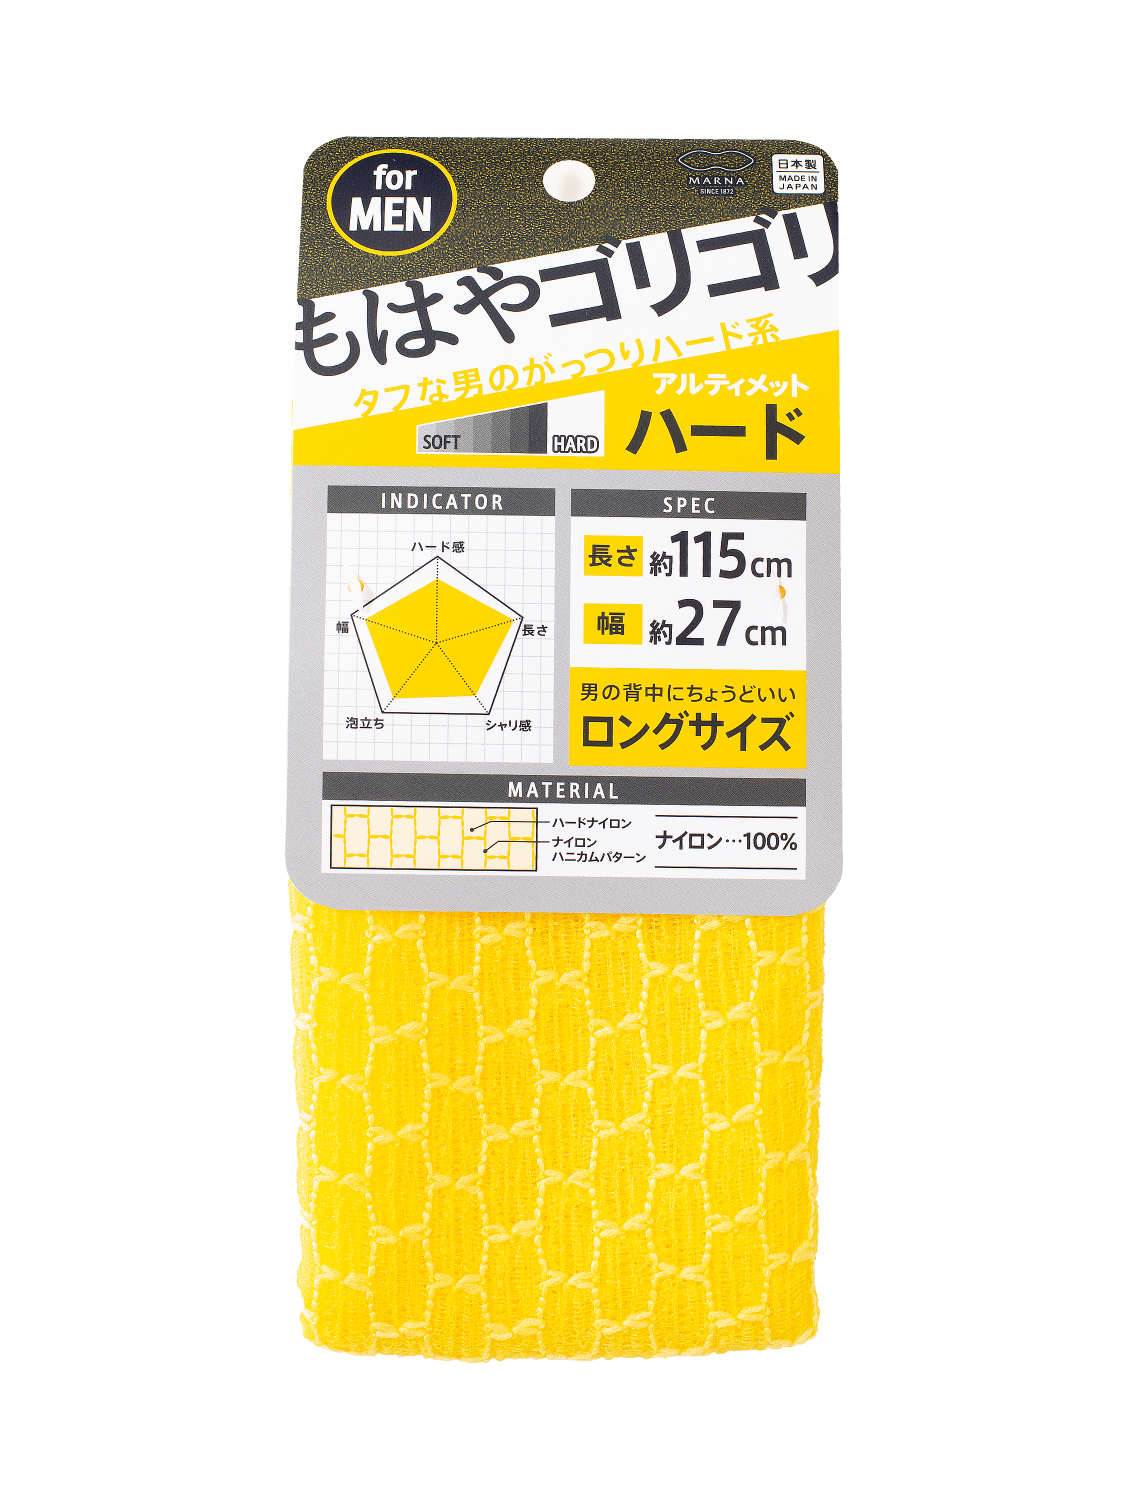 Marna Nylon Body Washcloth Super Hard Yellow - интернет-магазин профессиональной косметики Spadream, изображение 43306